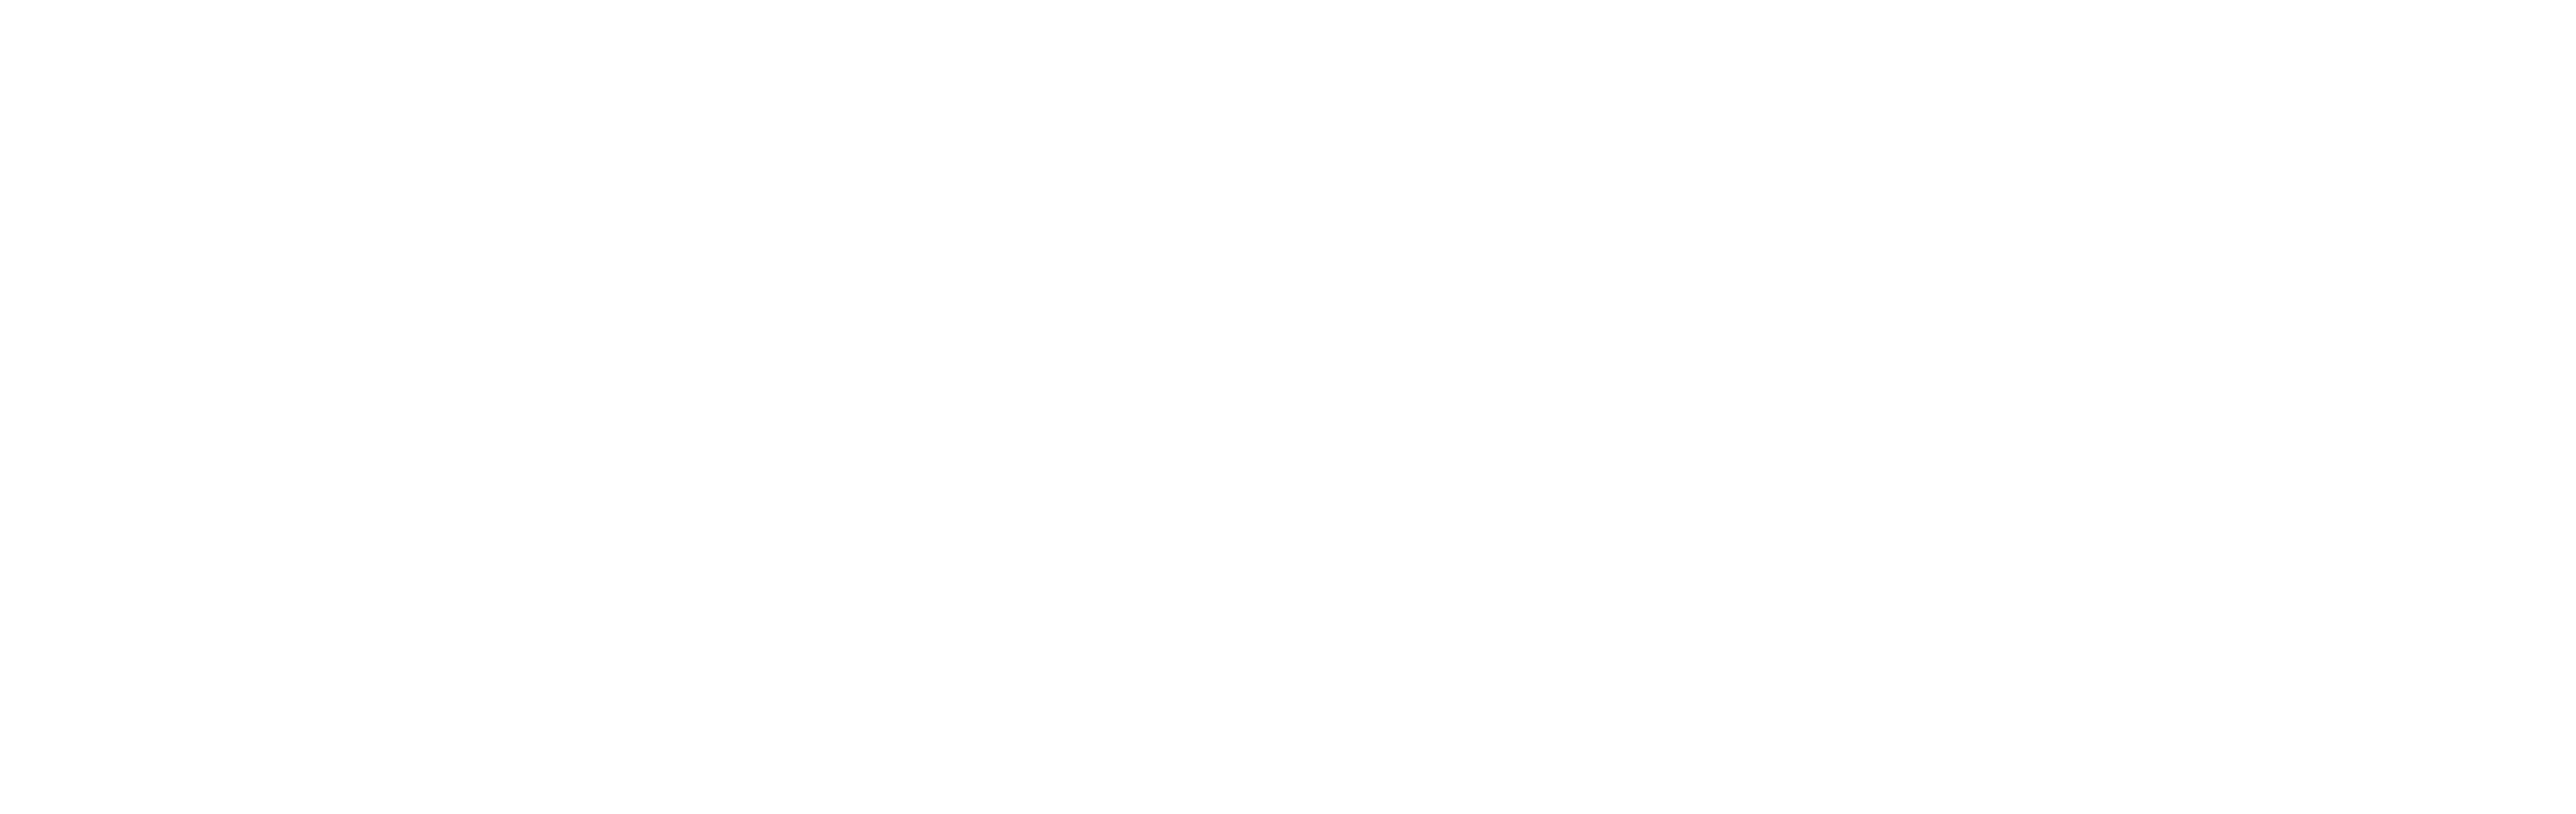 Zevo Health